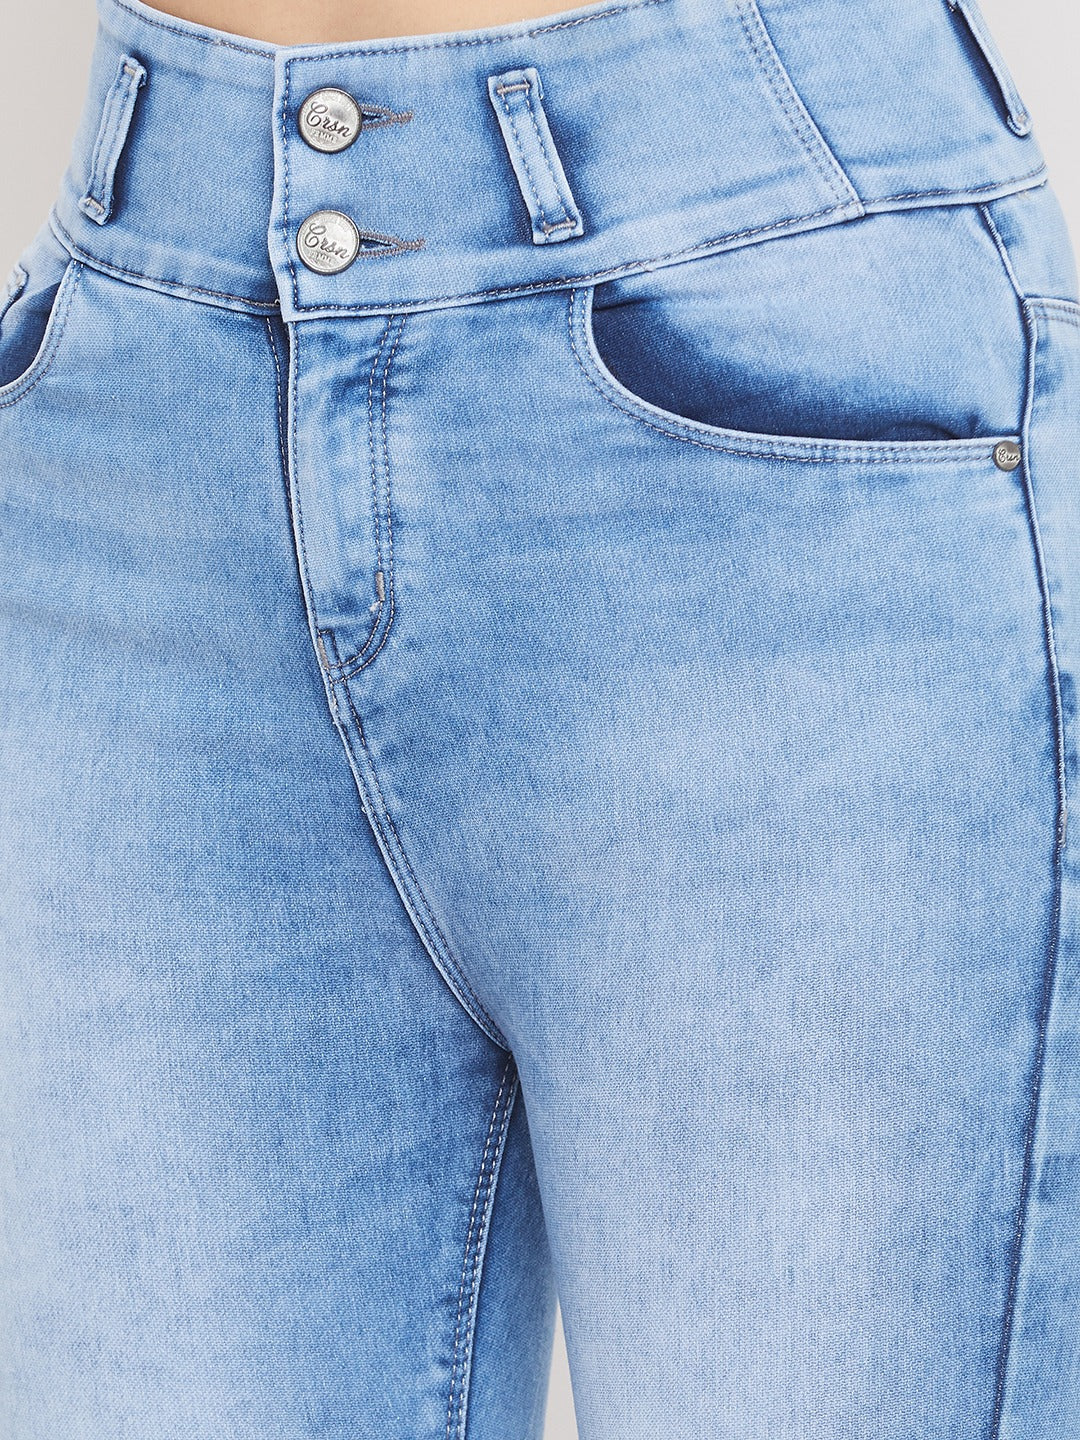 Blue Slim fit Denim Capris - Women Shorts